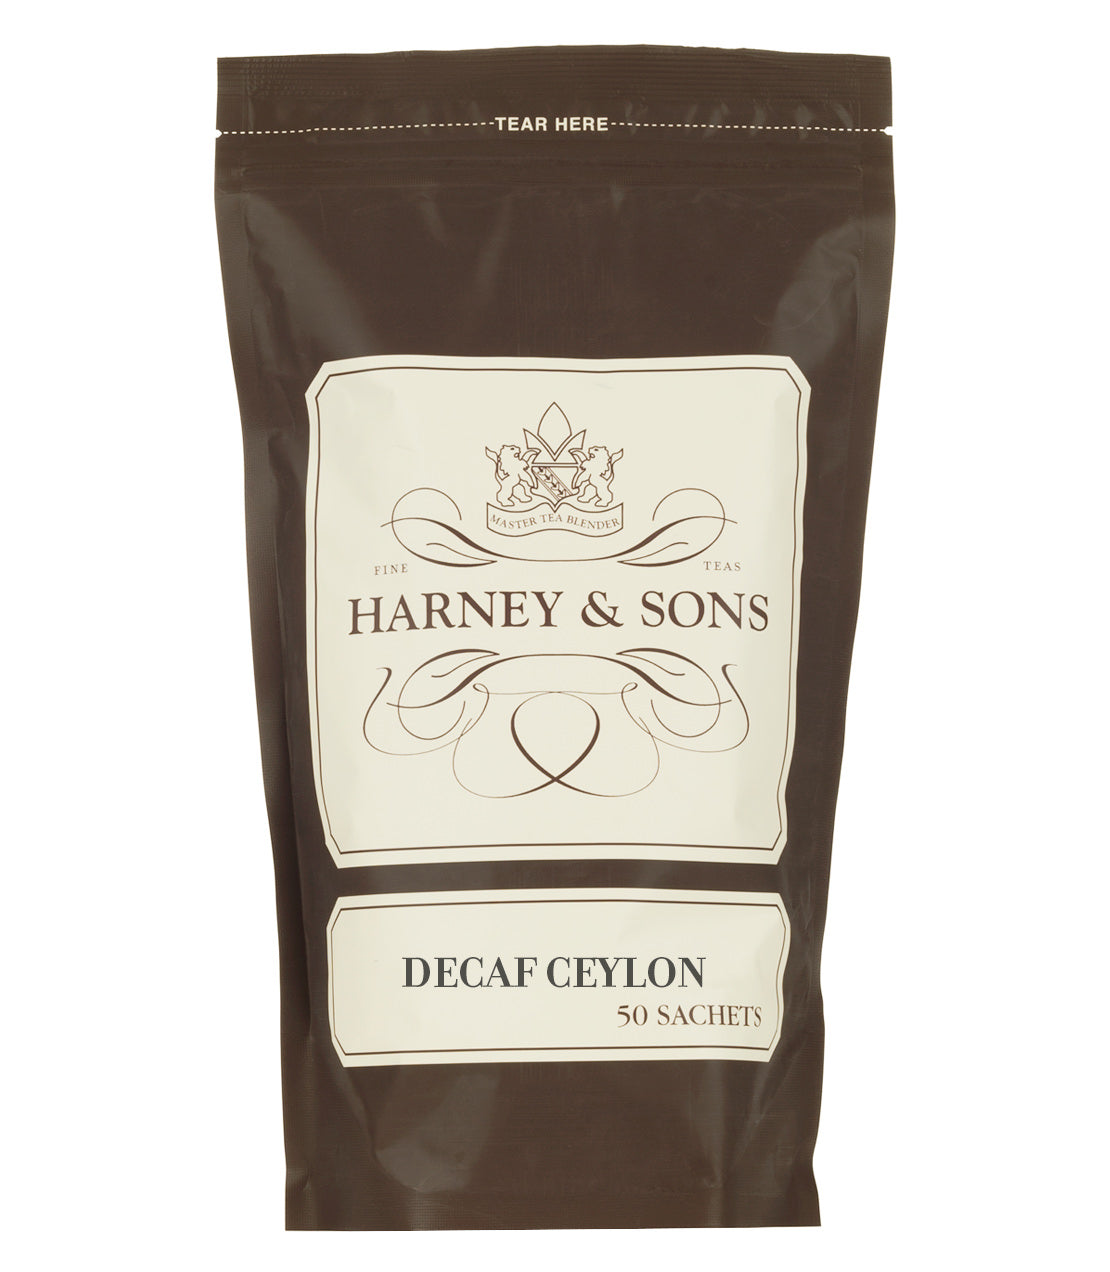 Decaf Ceylon (Decaf Orange Pekoe) - Sachets Bag of 50 Sachets - Harney & Sons Fine Teas